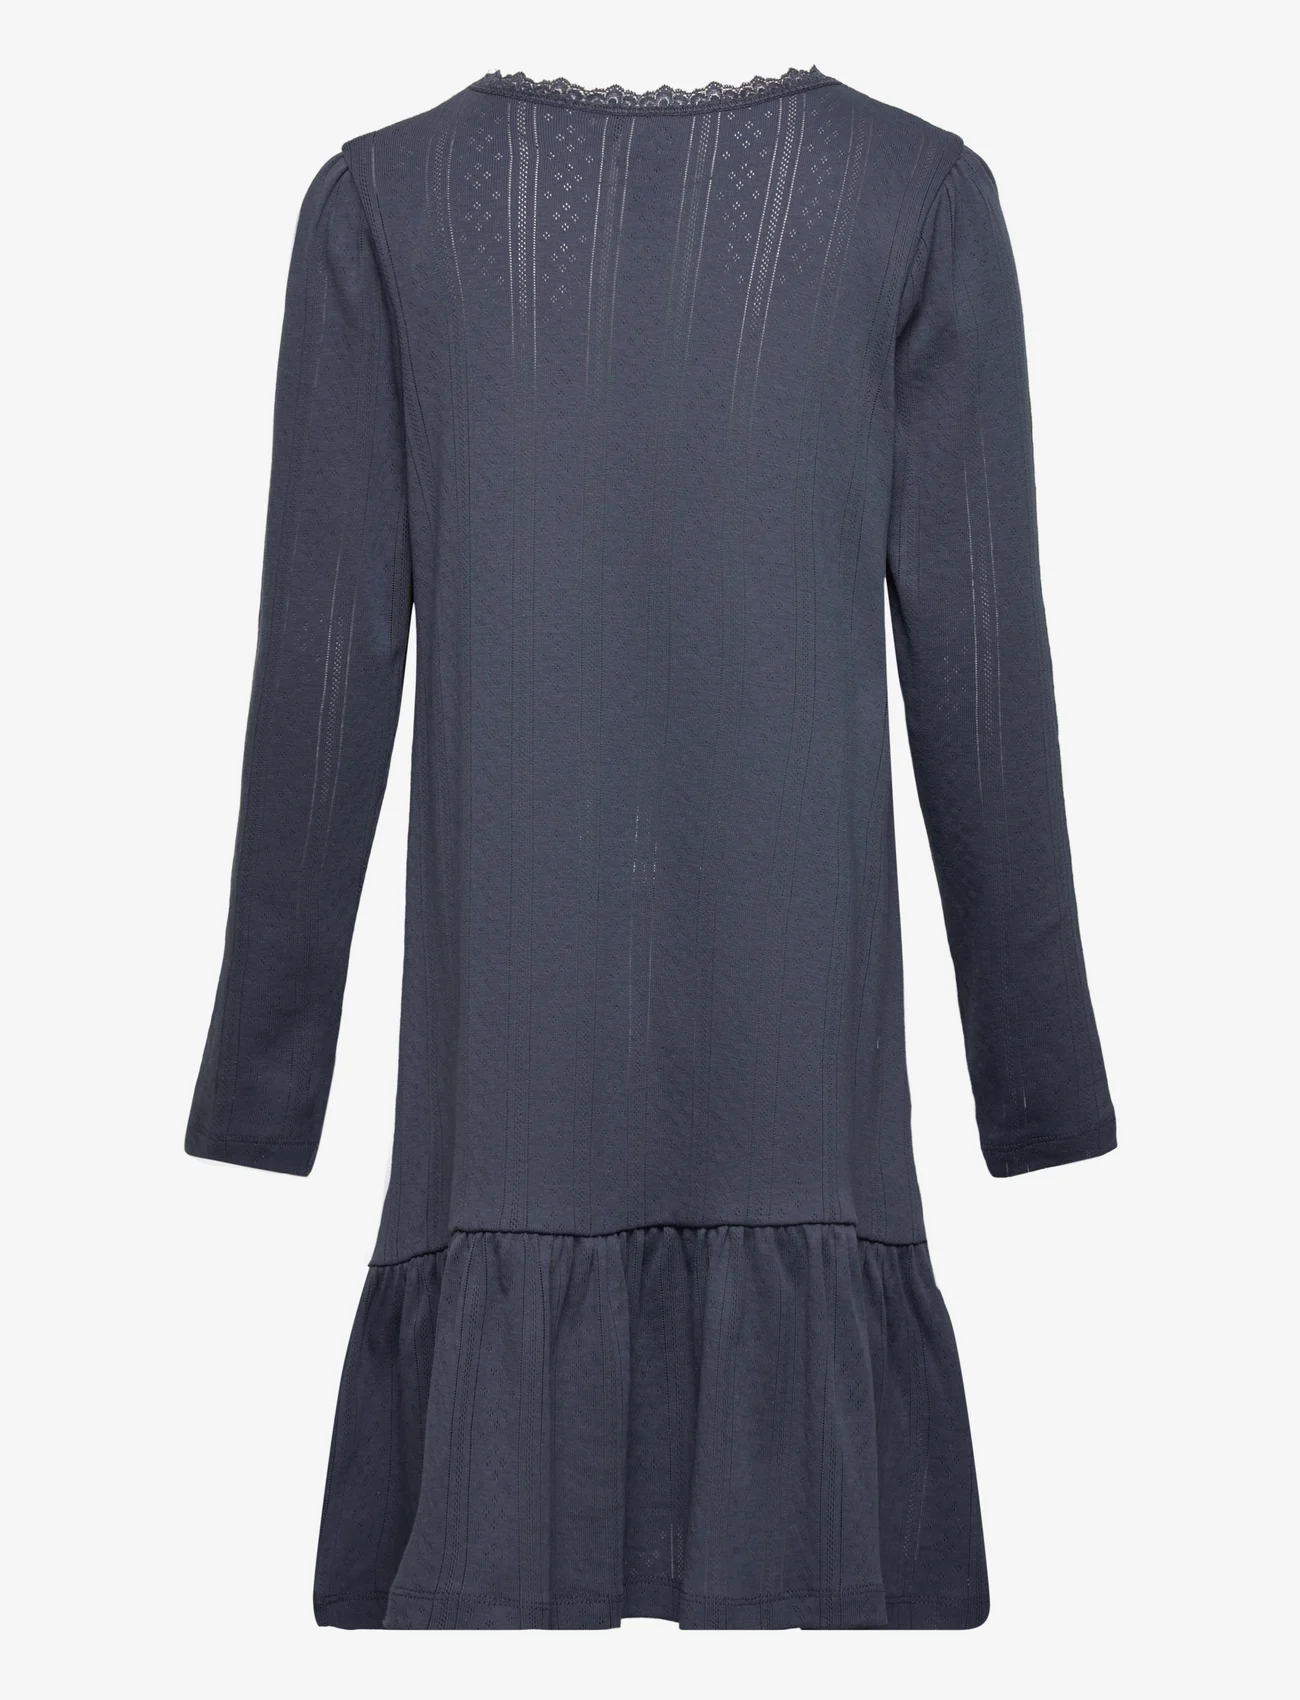 Noa Noa miniature - Dress long sleeve - laisvalaikio suknelės ilgomis rankovėmis - mood indigo - 1